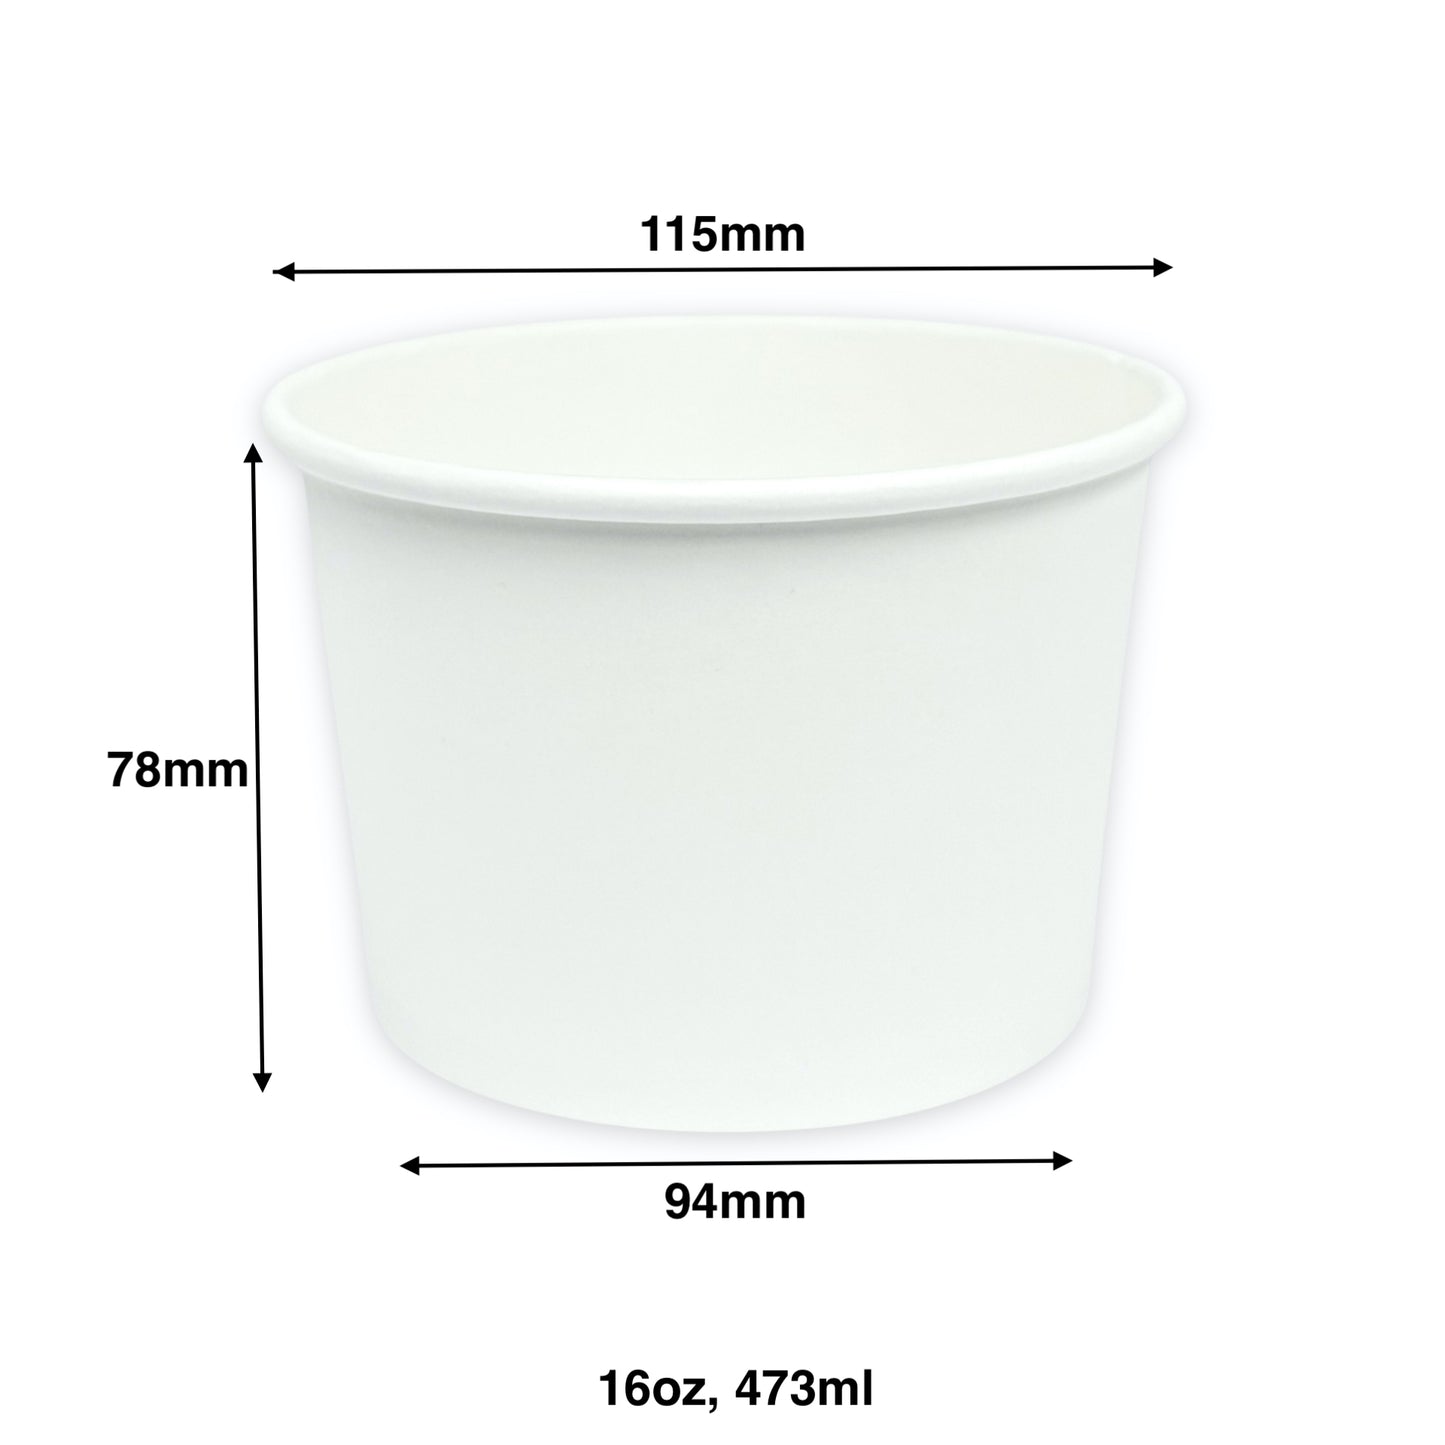 KIS-EM16G | 16oz, 473ml White Paper Soup Cup Base; From $0.105/pc